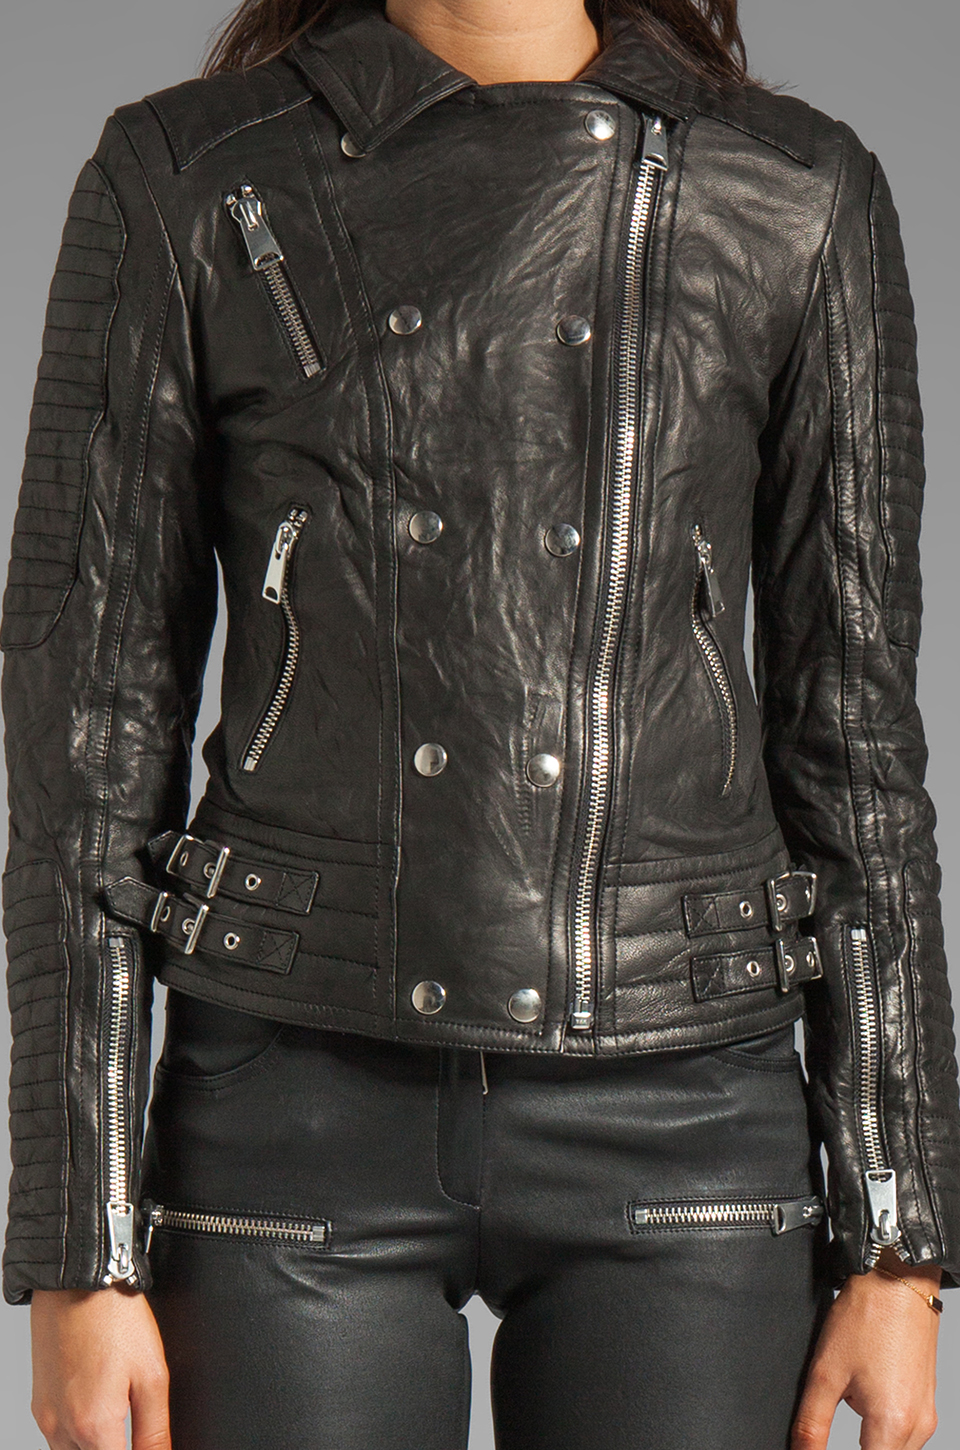 Anine Bing Moto Leather Jacket in Black - Lyst